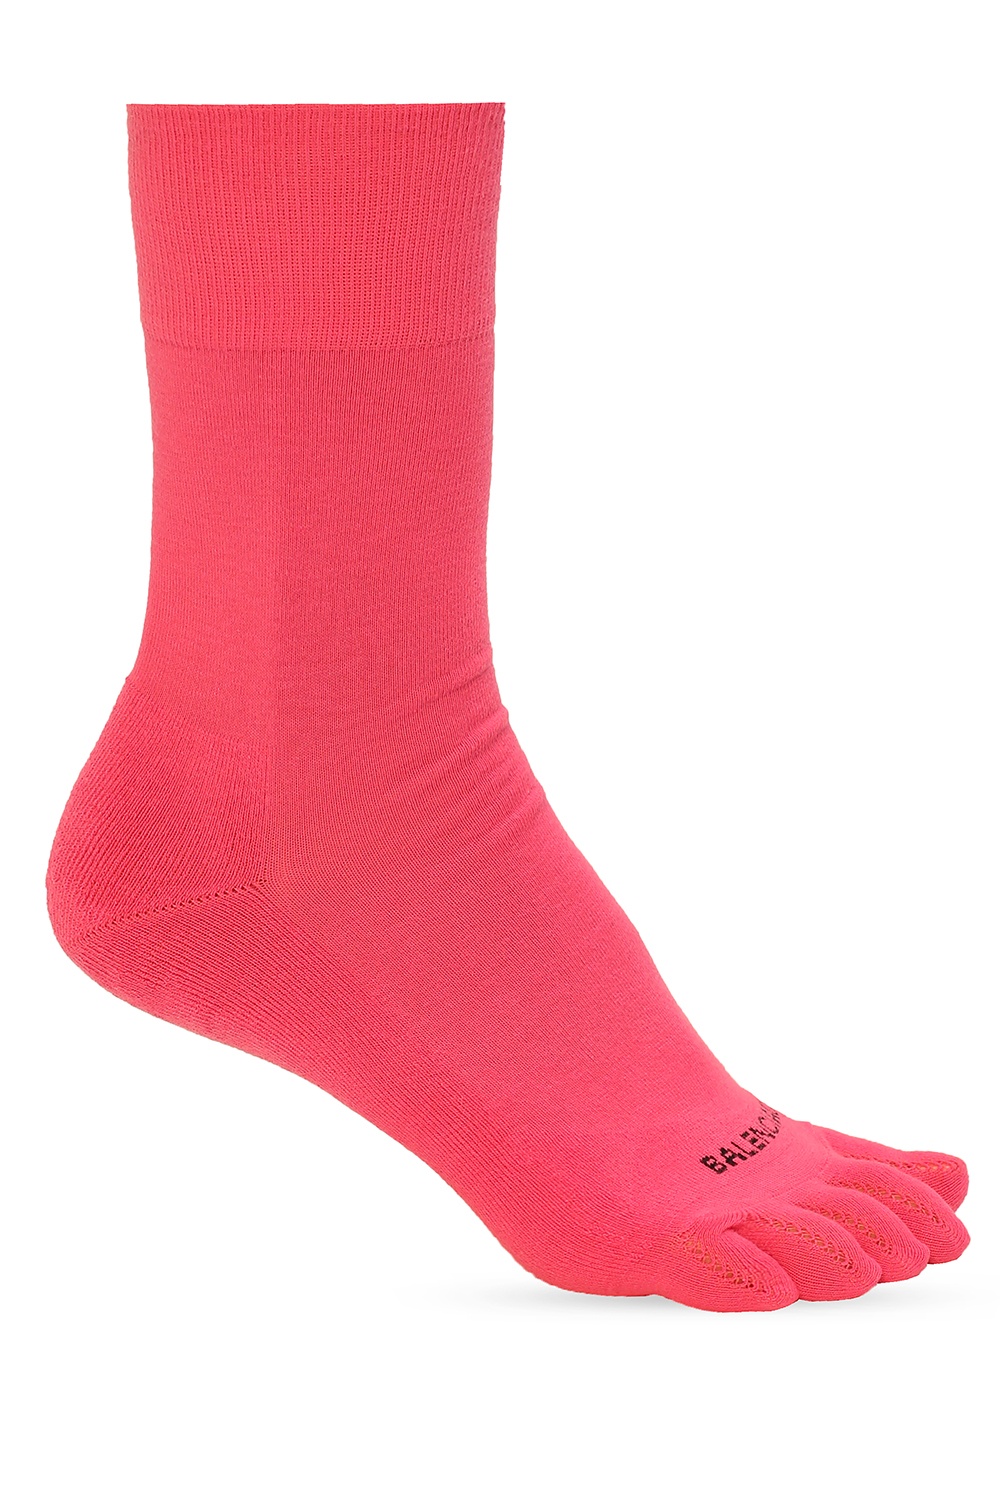 pink sock balenciaga